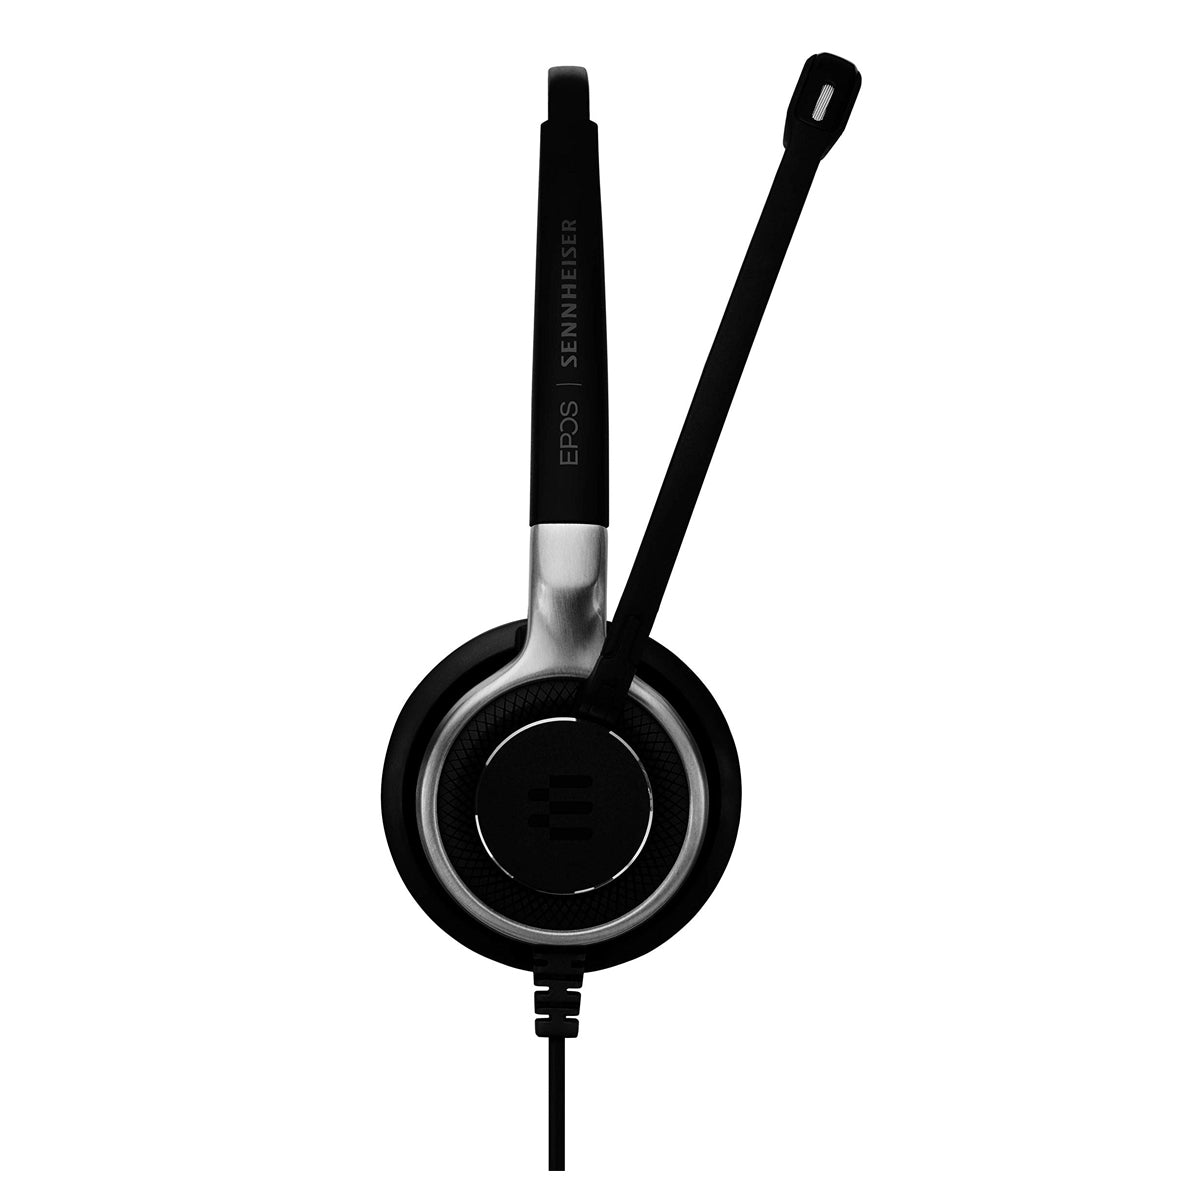 Sennheiser SC 665 Binaural Headset, Black-Silver, 3.5mm Jack Plug